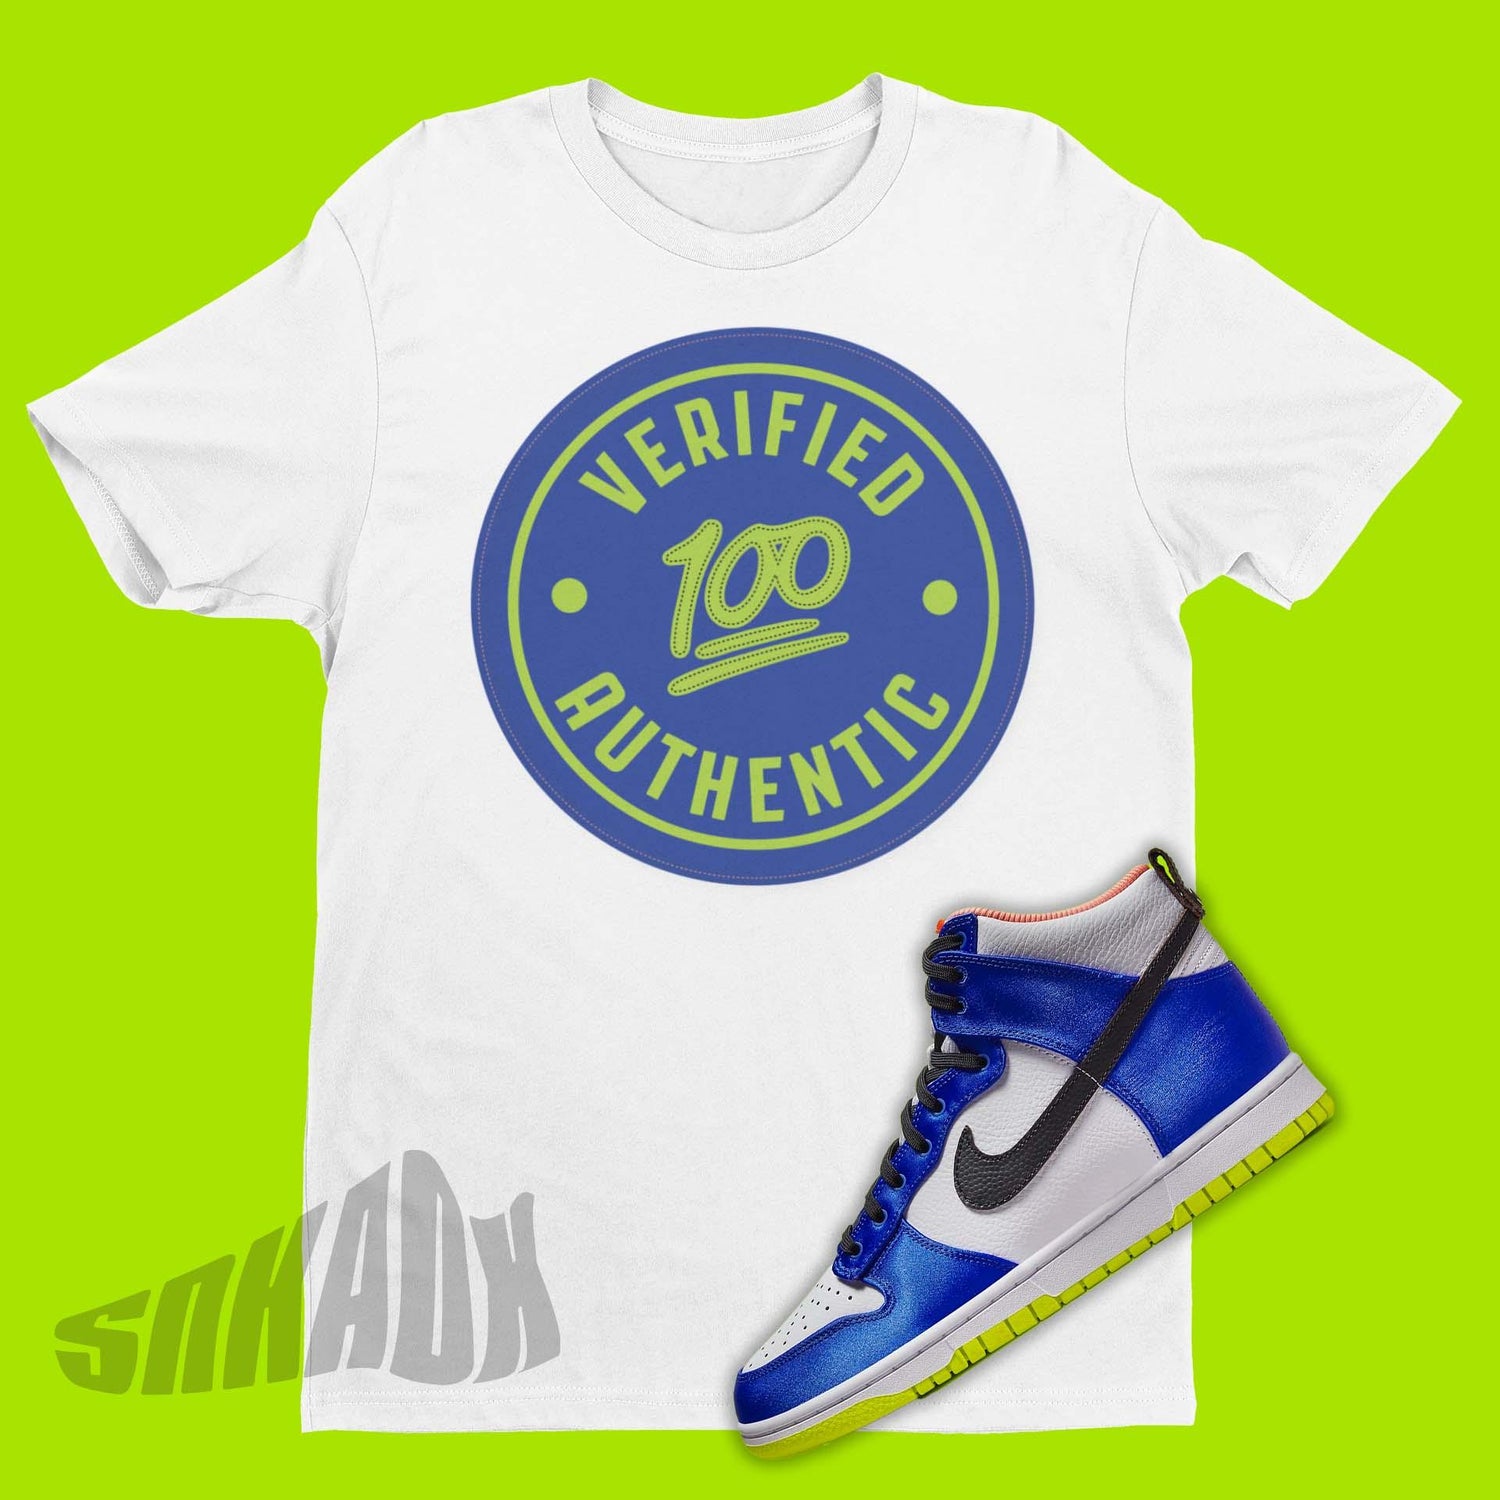 Verified Authentic Shirt To Match Nike Dunk High Blue Satin